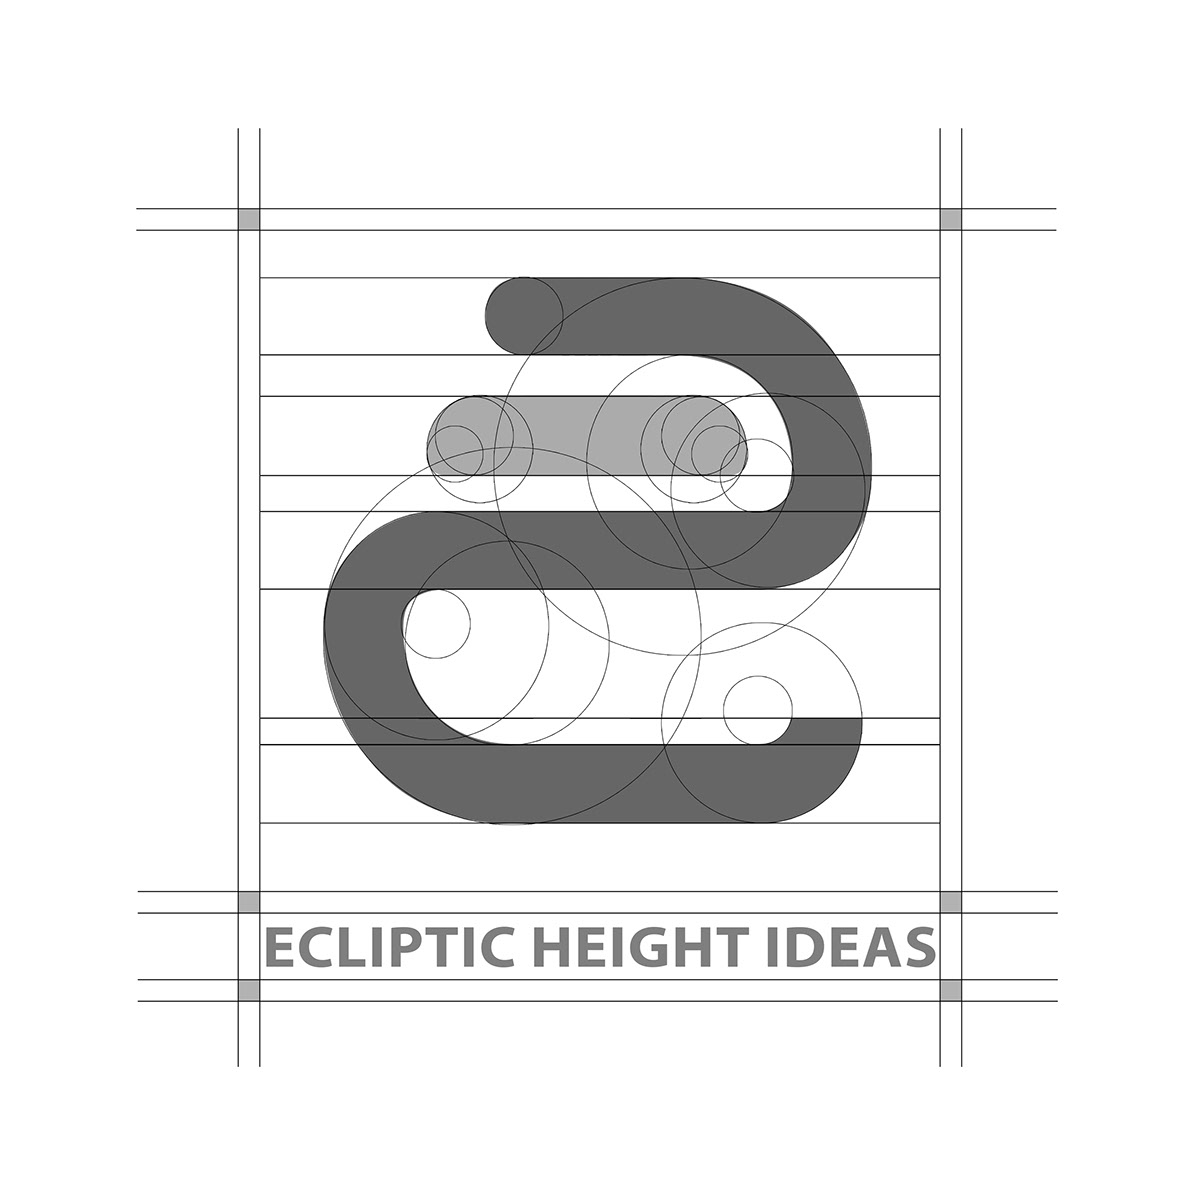 Ecliptic Hight Ideas